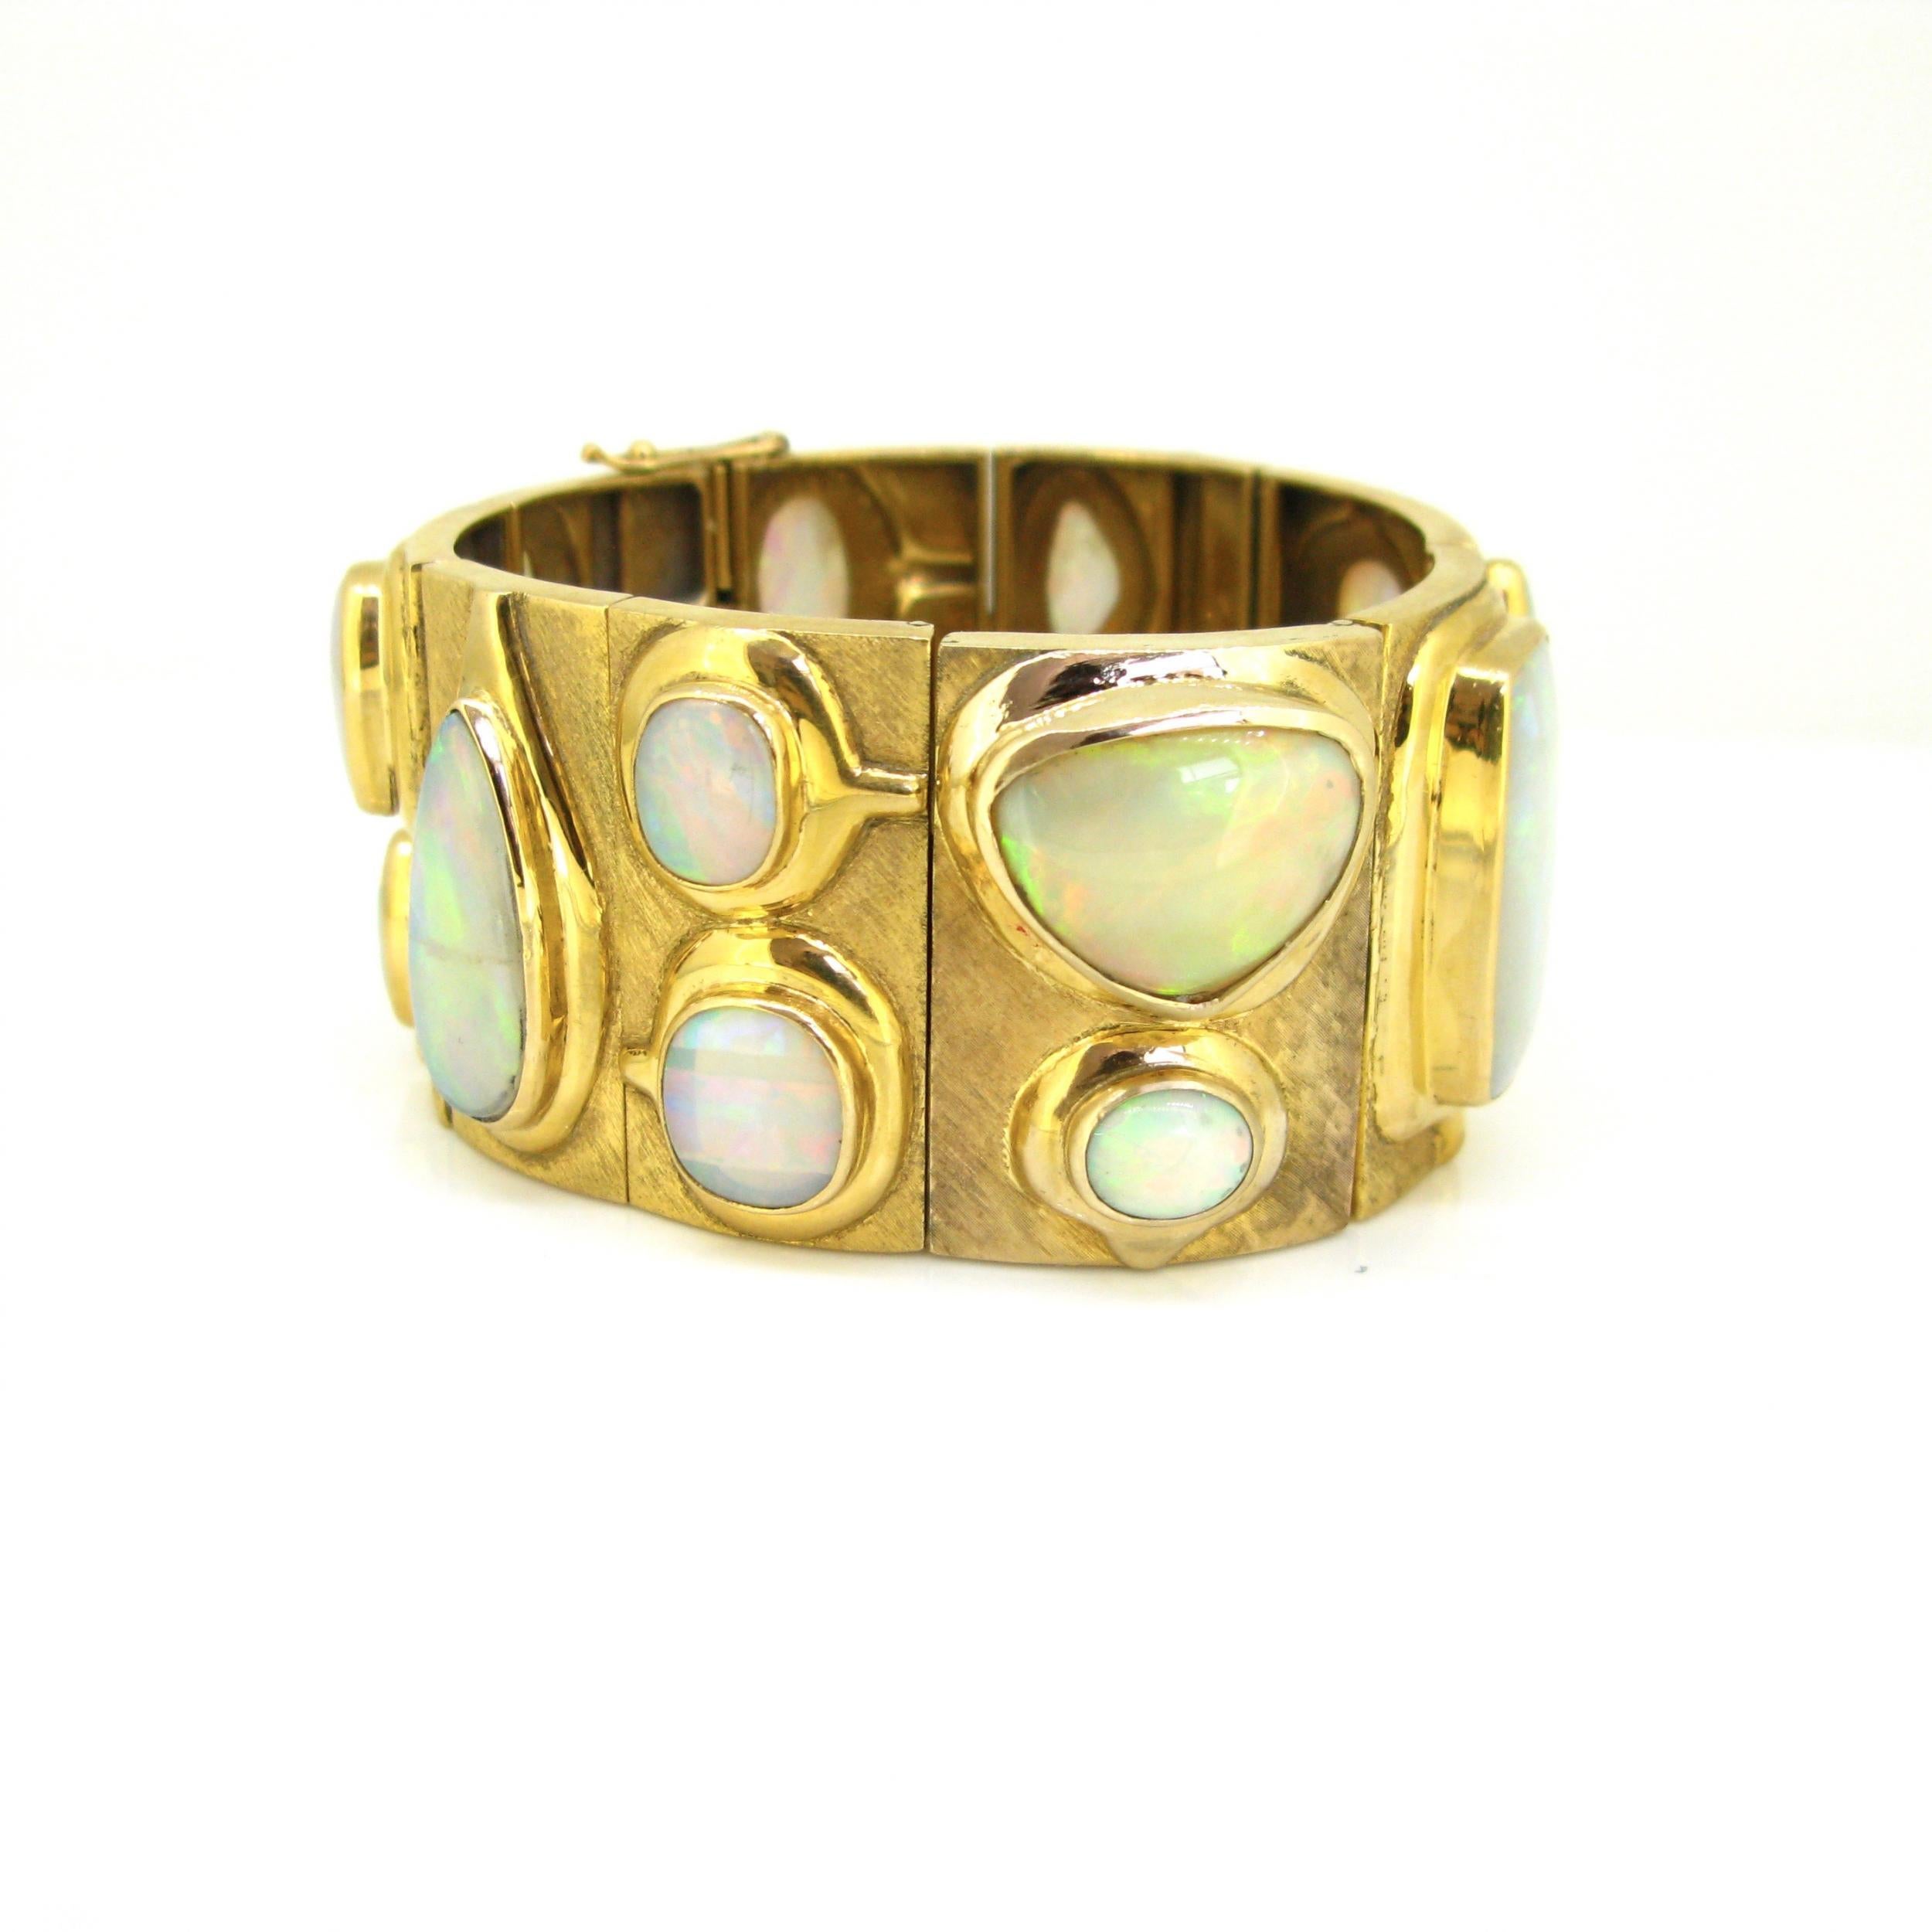 Women's or Men's Vintage 17 Opals Large Bracelet Bangle by BURLE MARX, 18kt yellow gold circa 196